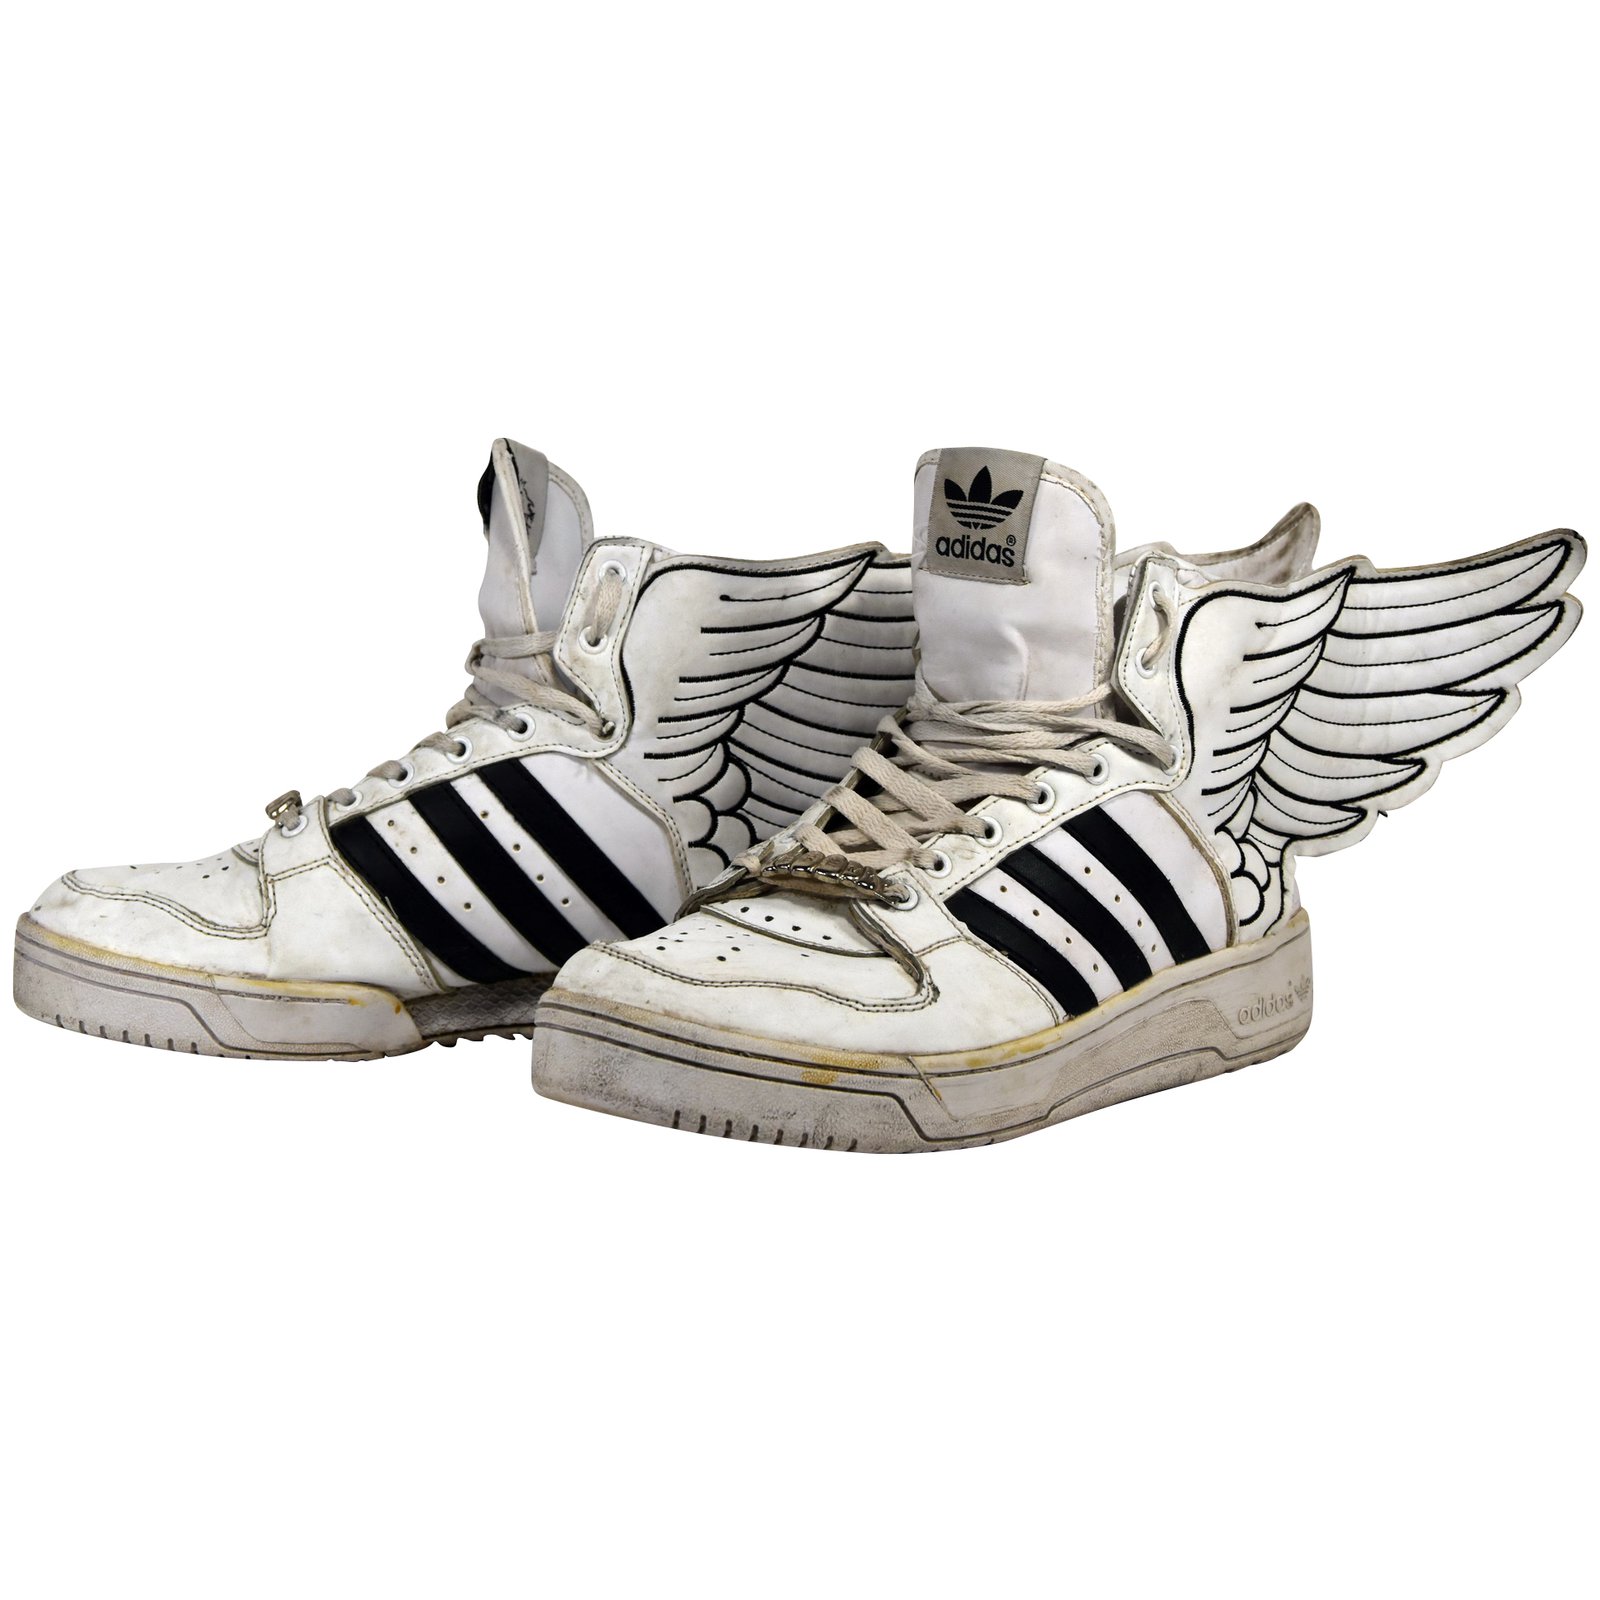 jeremy scott wings adidas 